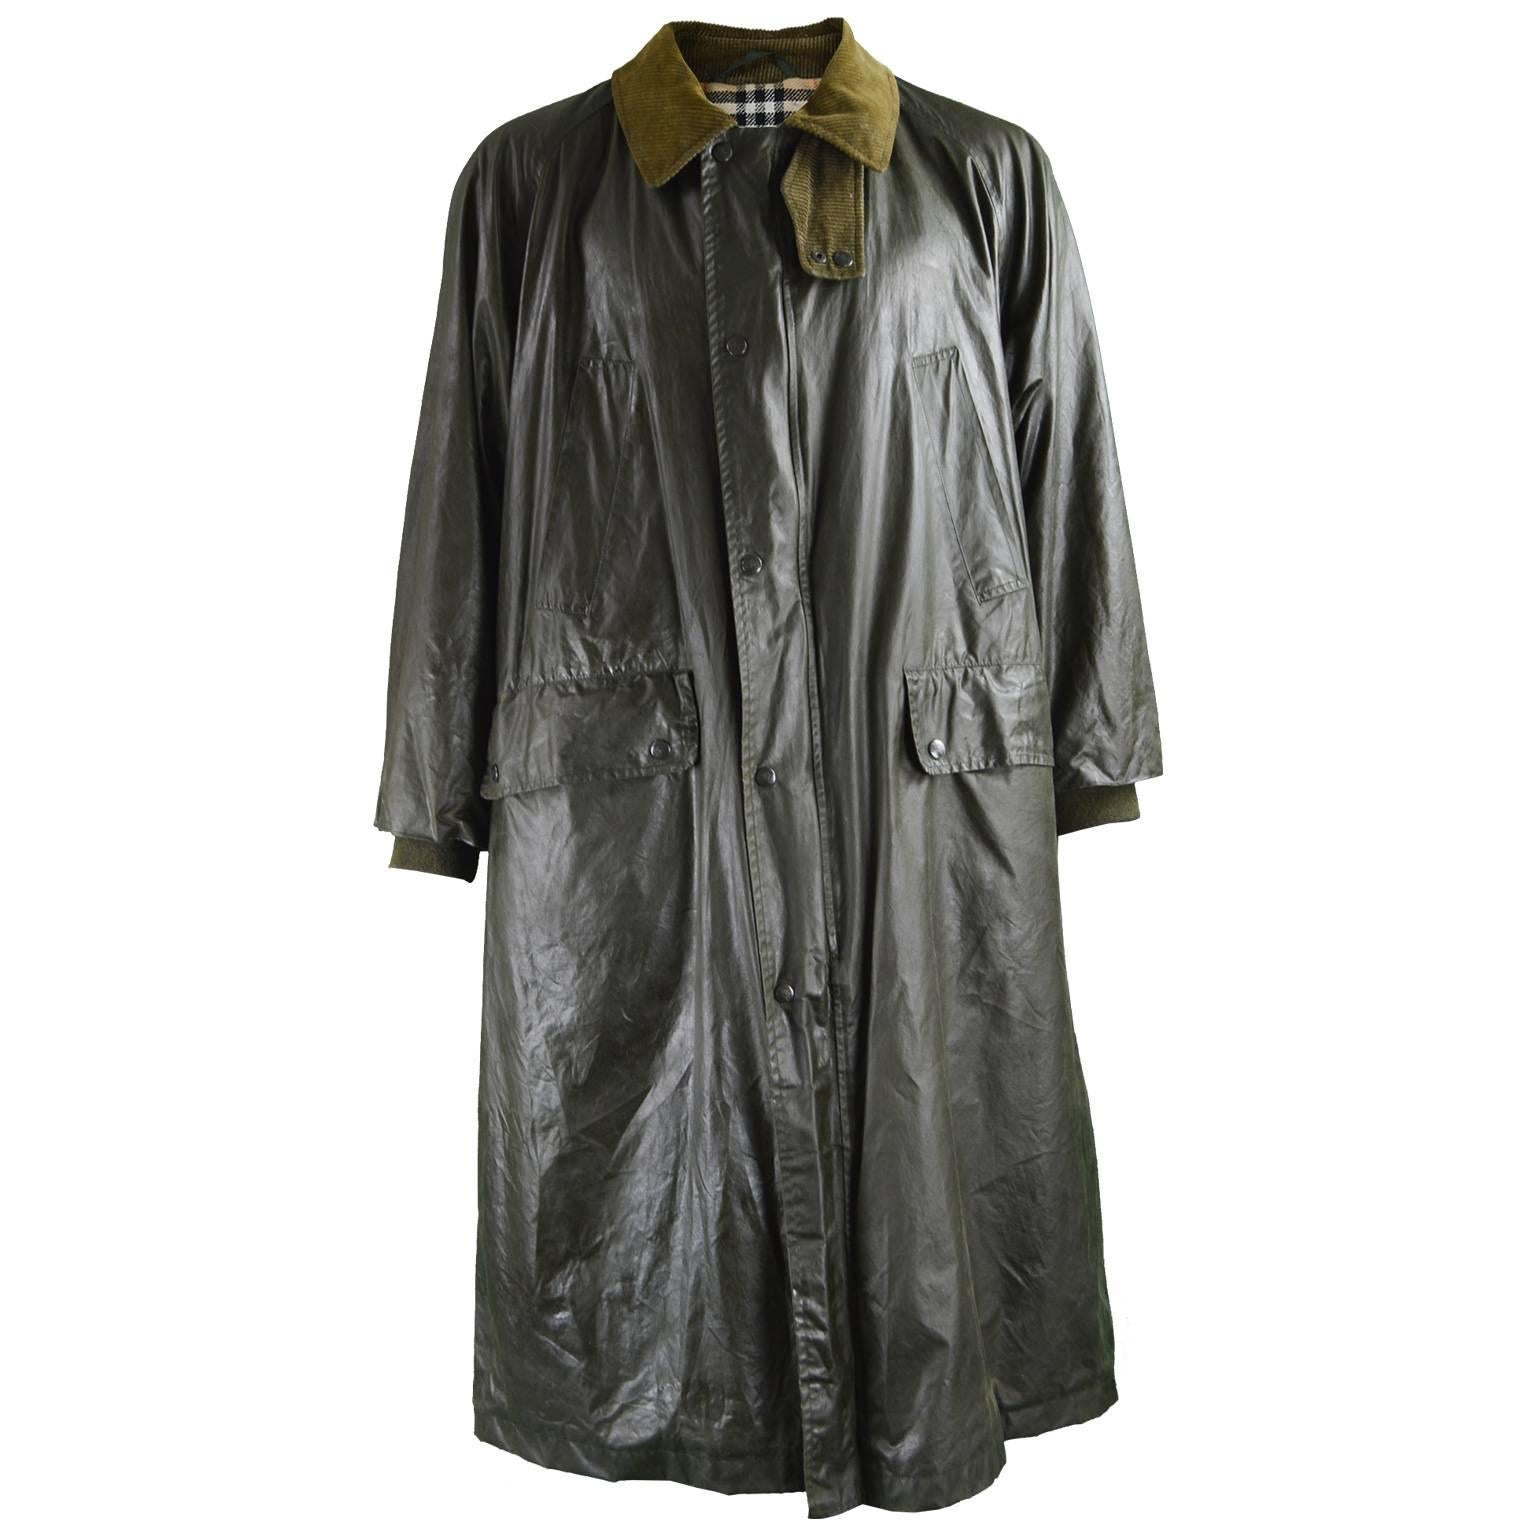 burberry raincoat sale